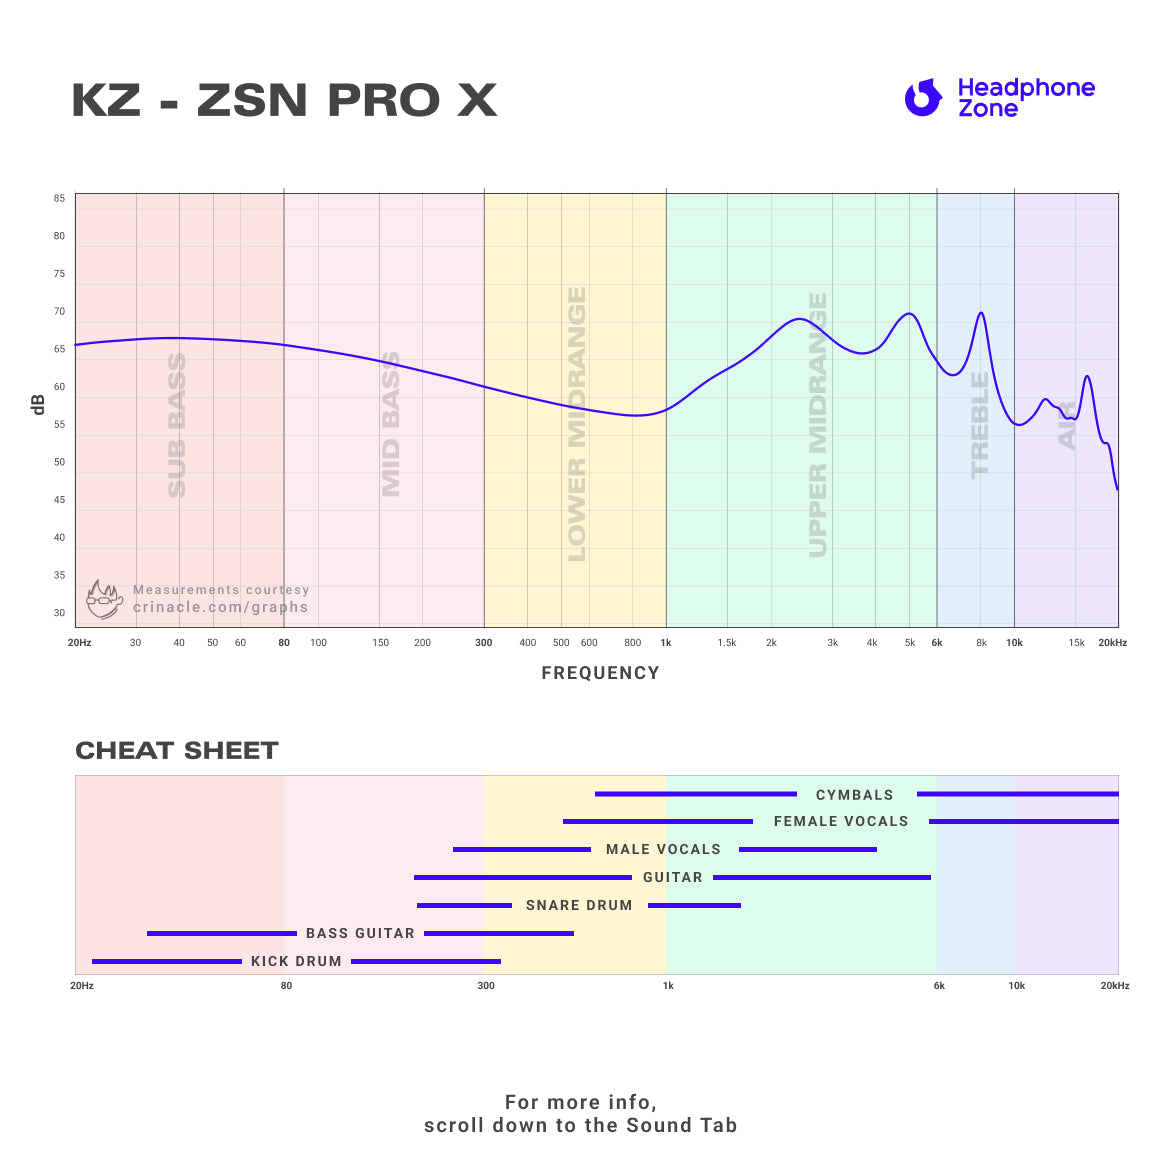 KZ - ZSN Pro X